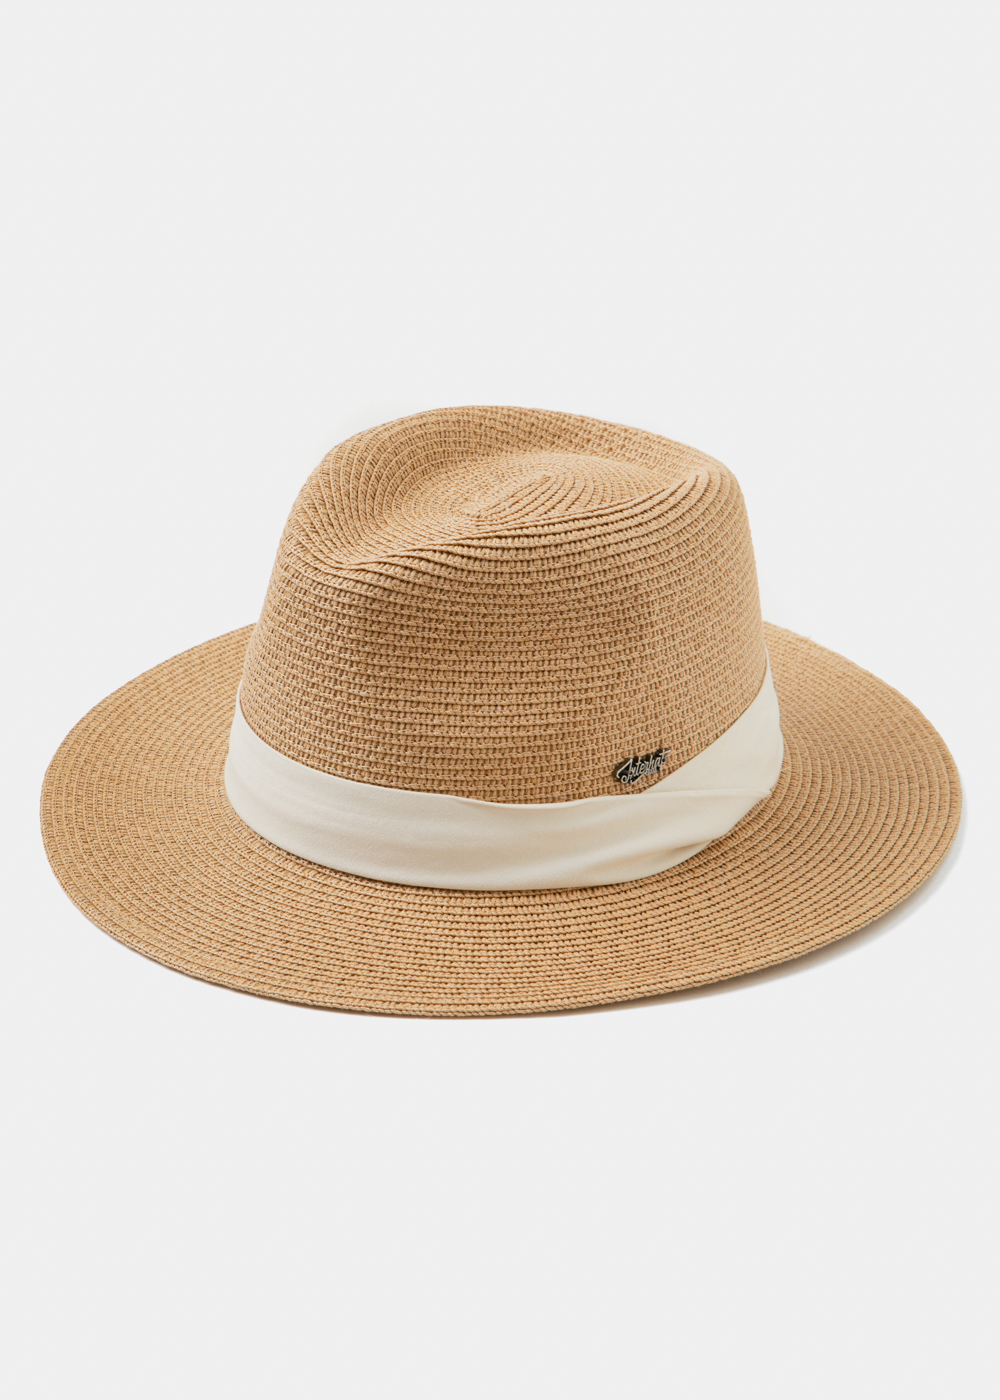 Brown Panama Style Hat w/ cream hatband